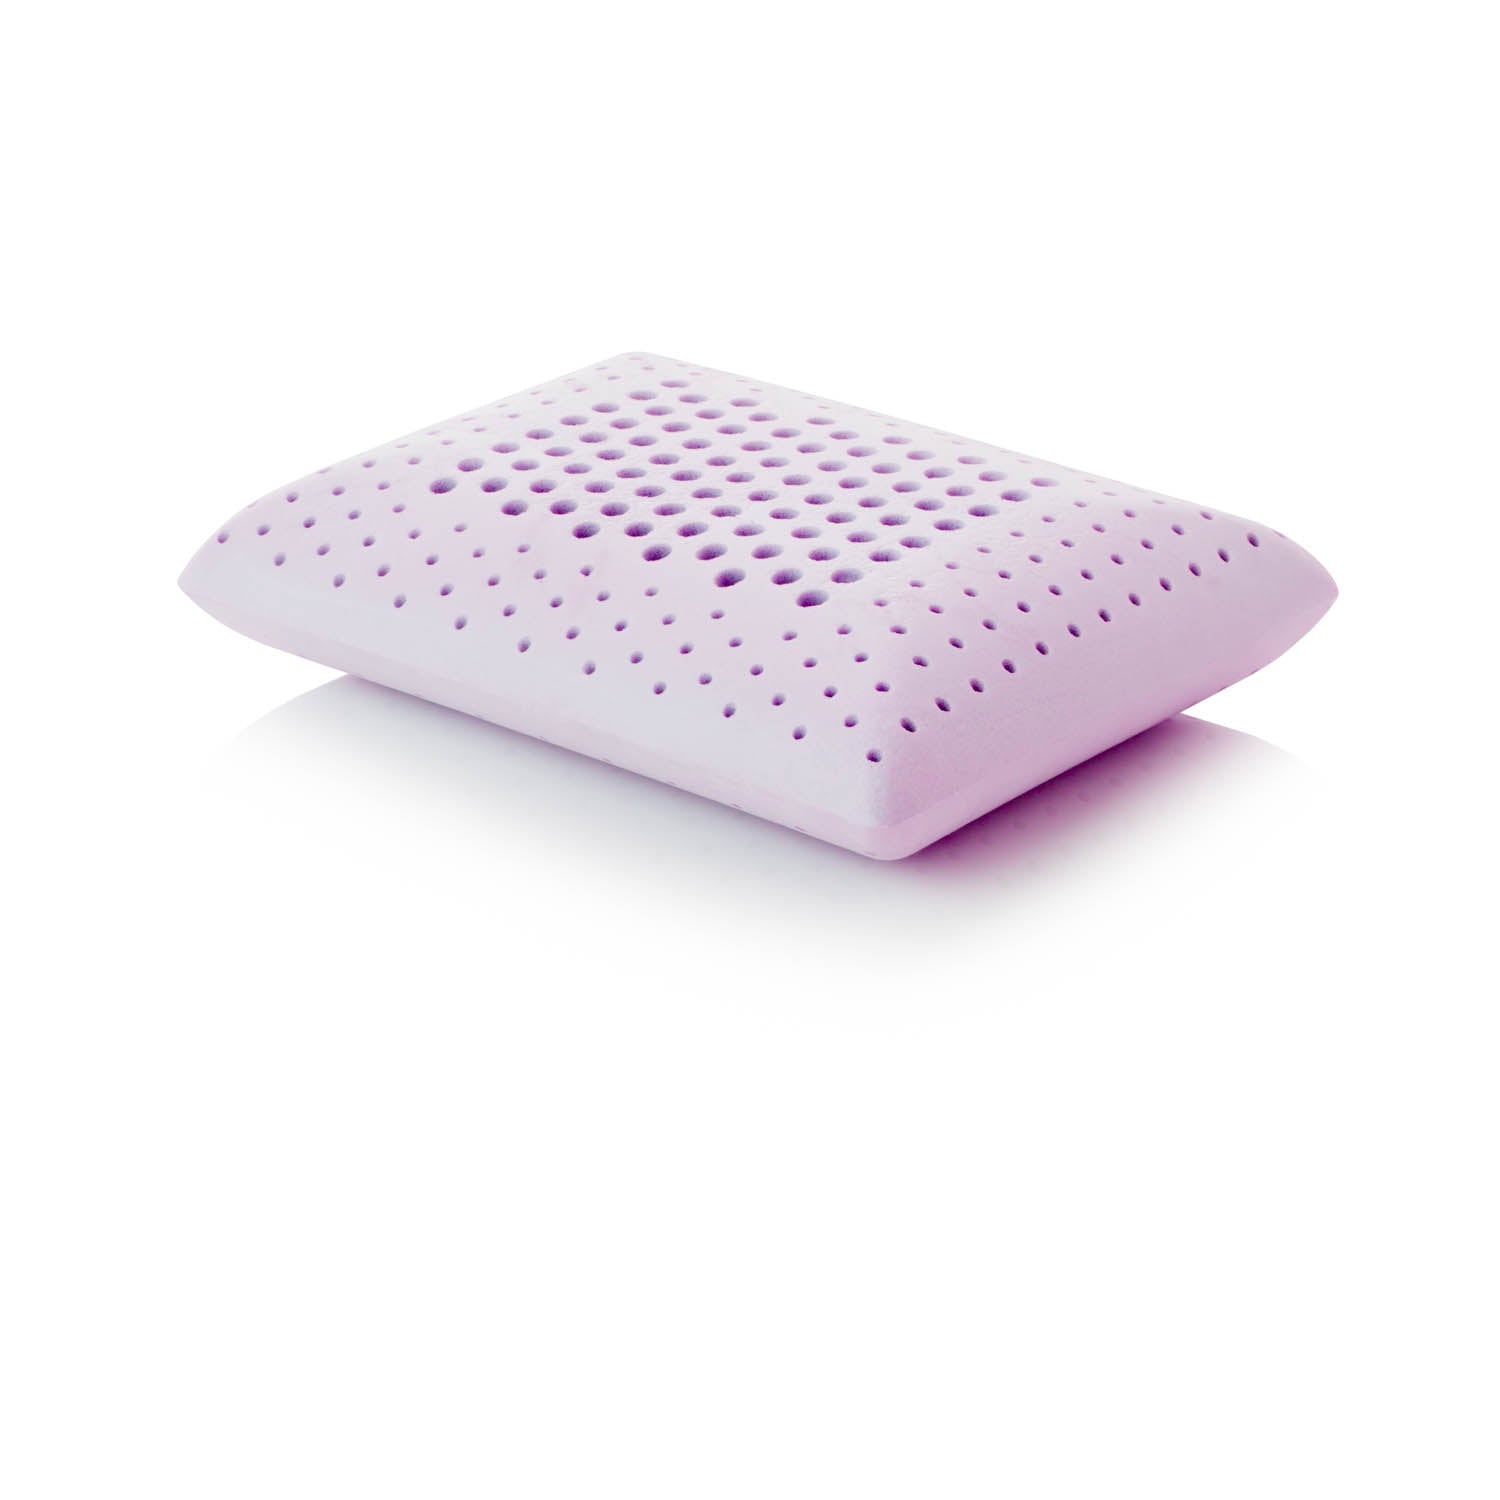 Aromatherapy Travel Zoned Dough Pillow - Ultimate Comfort Sleep